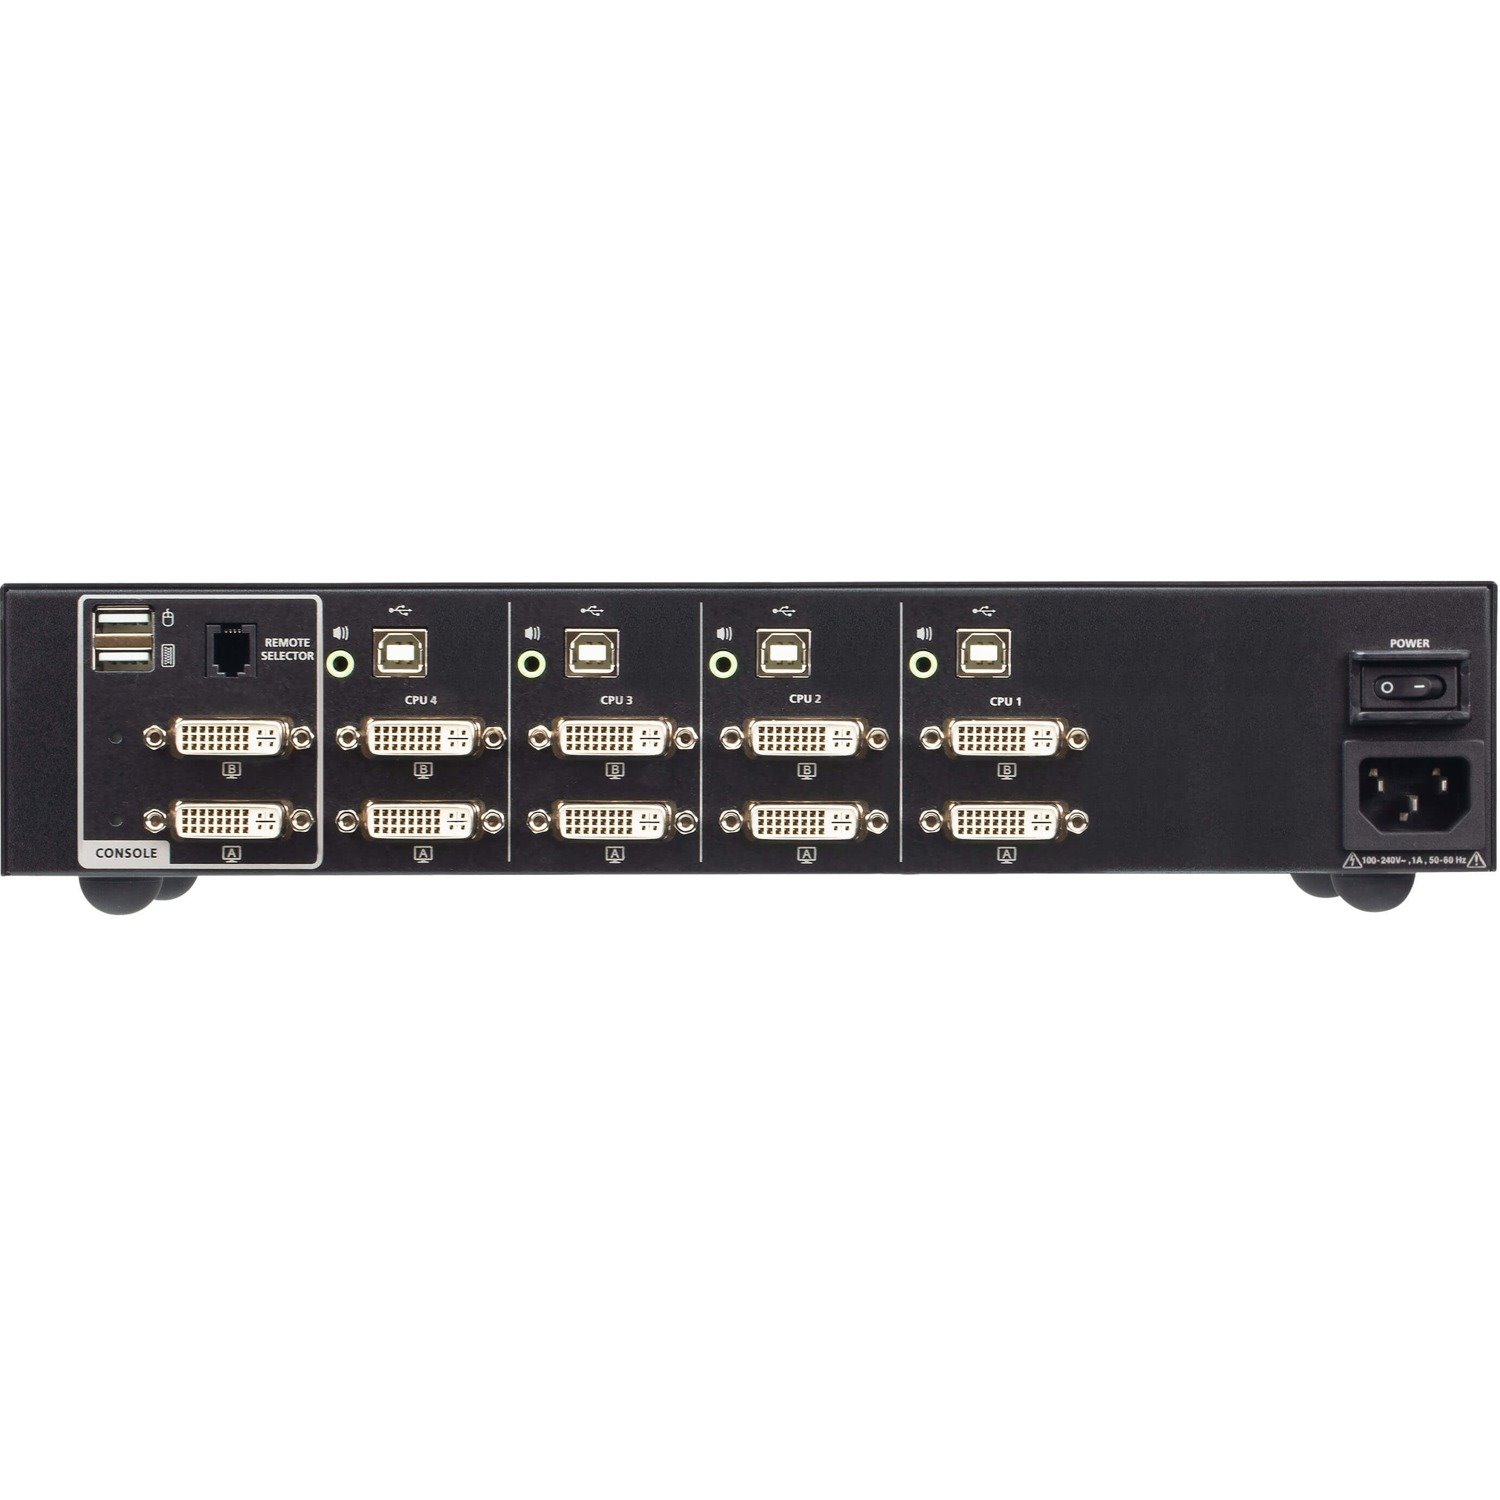 ATEN 4-Port USB DVI Dual Display Secure KVM Switch (PSD PP v4.0 Compliant)